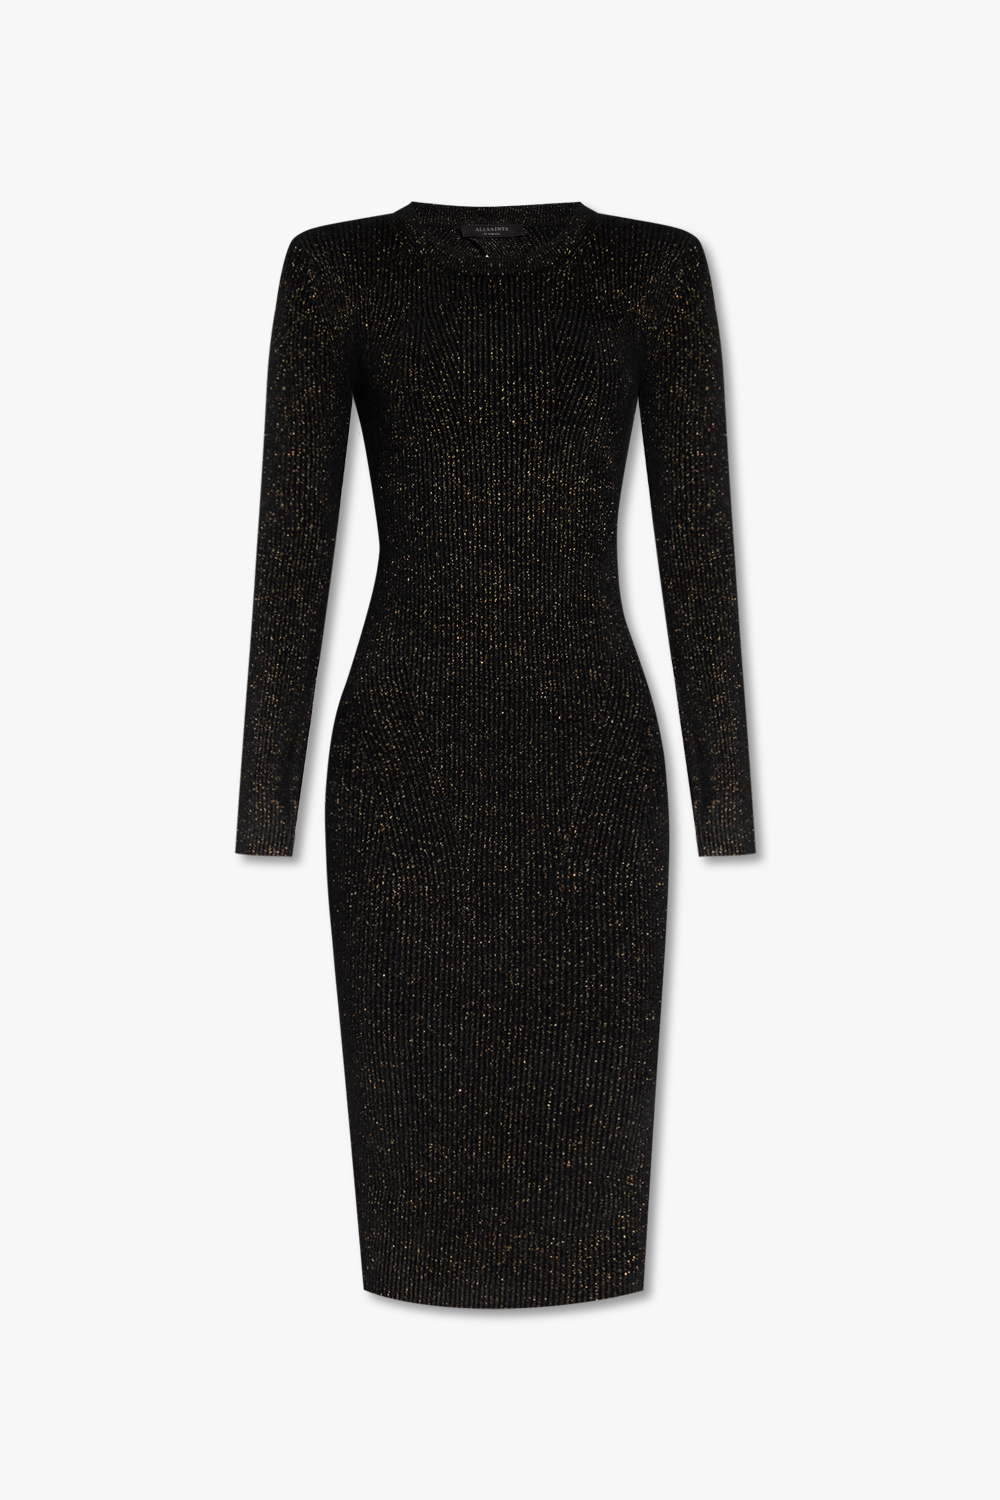 Black 'Loleatta' dress AllSaints - Vitkac France